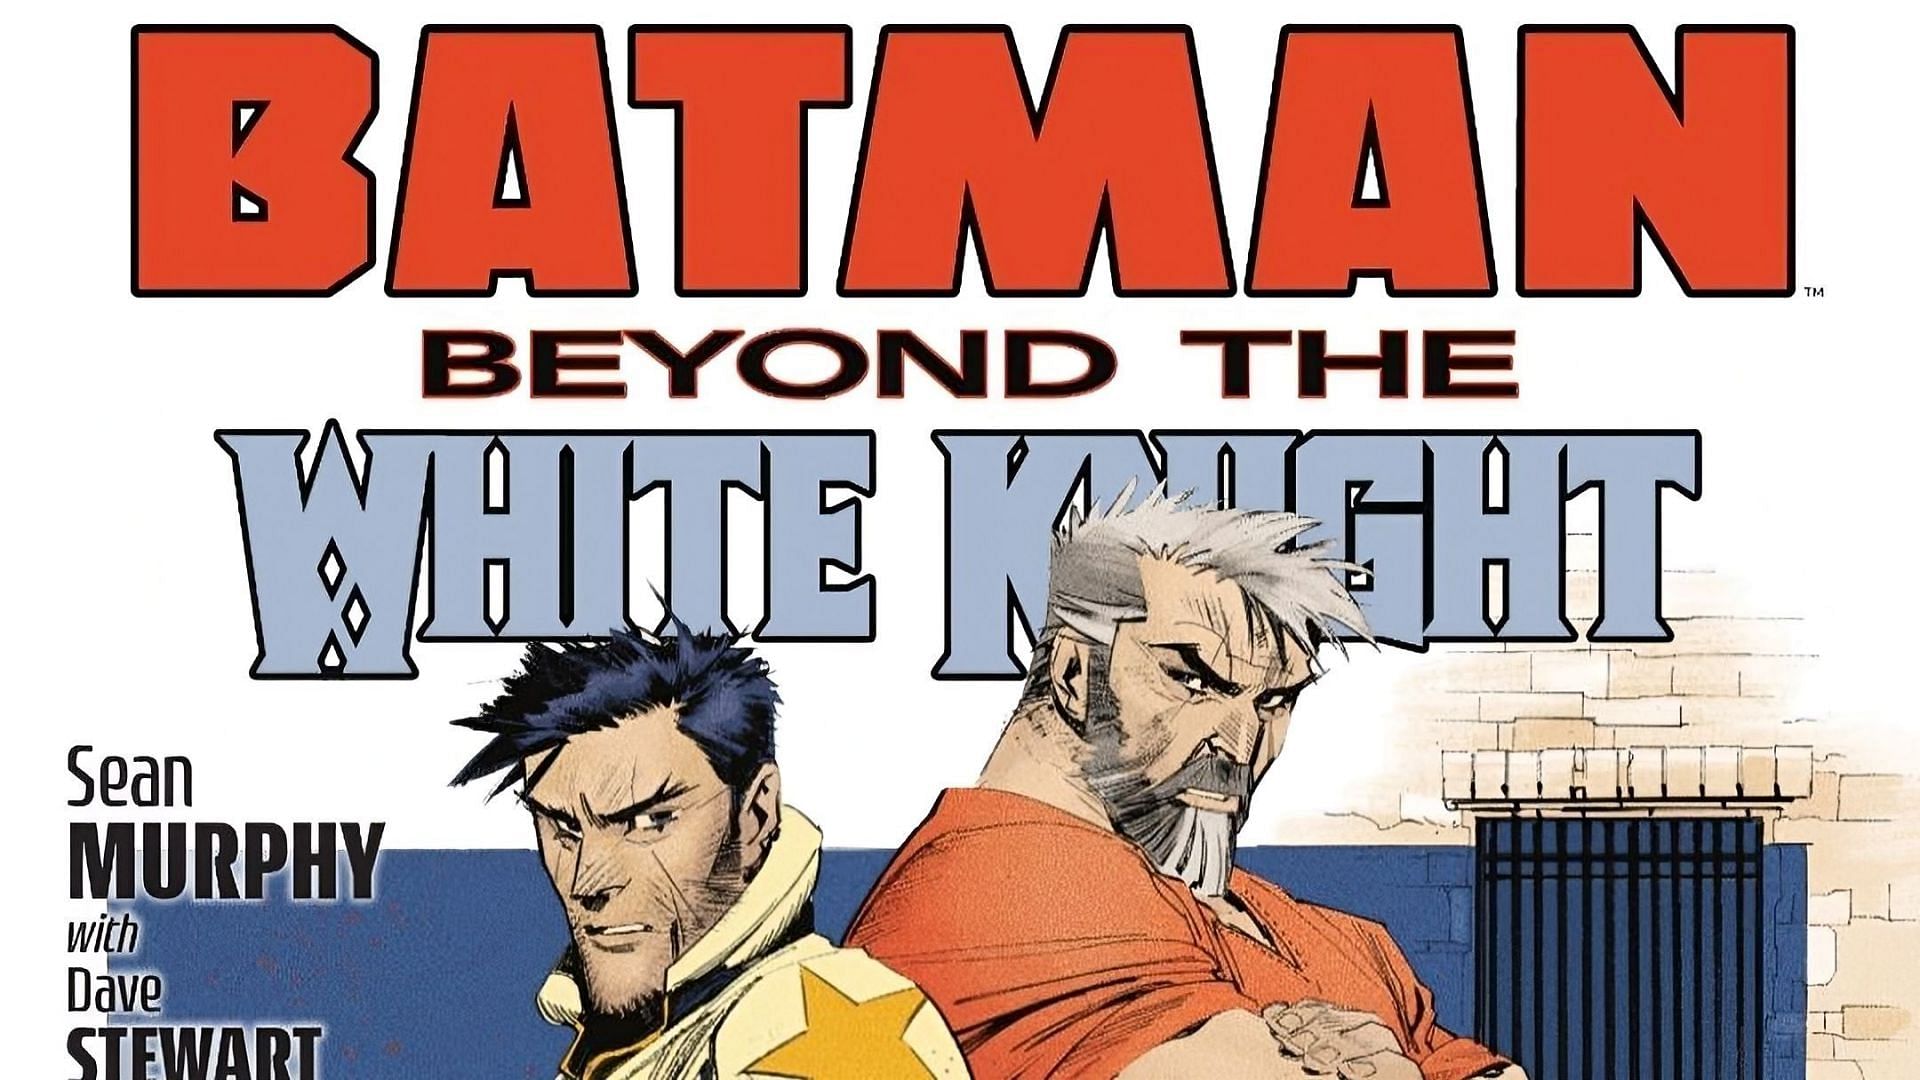 Batman: Beyond the White Knight #2 cover (Image via DC Comics)